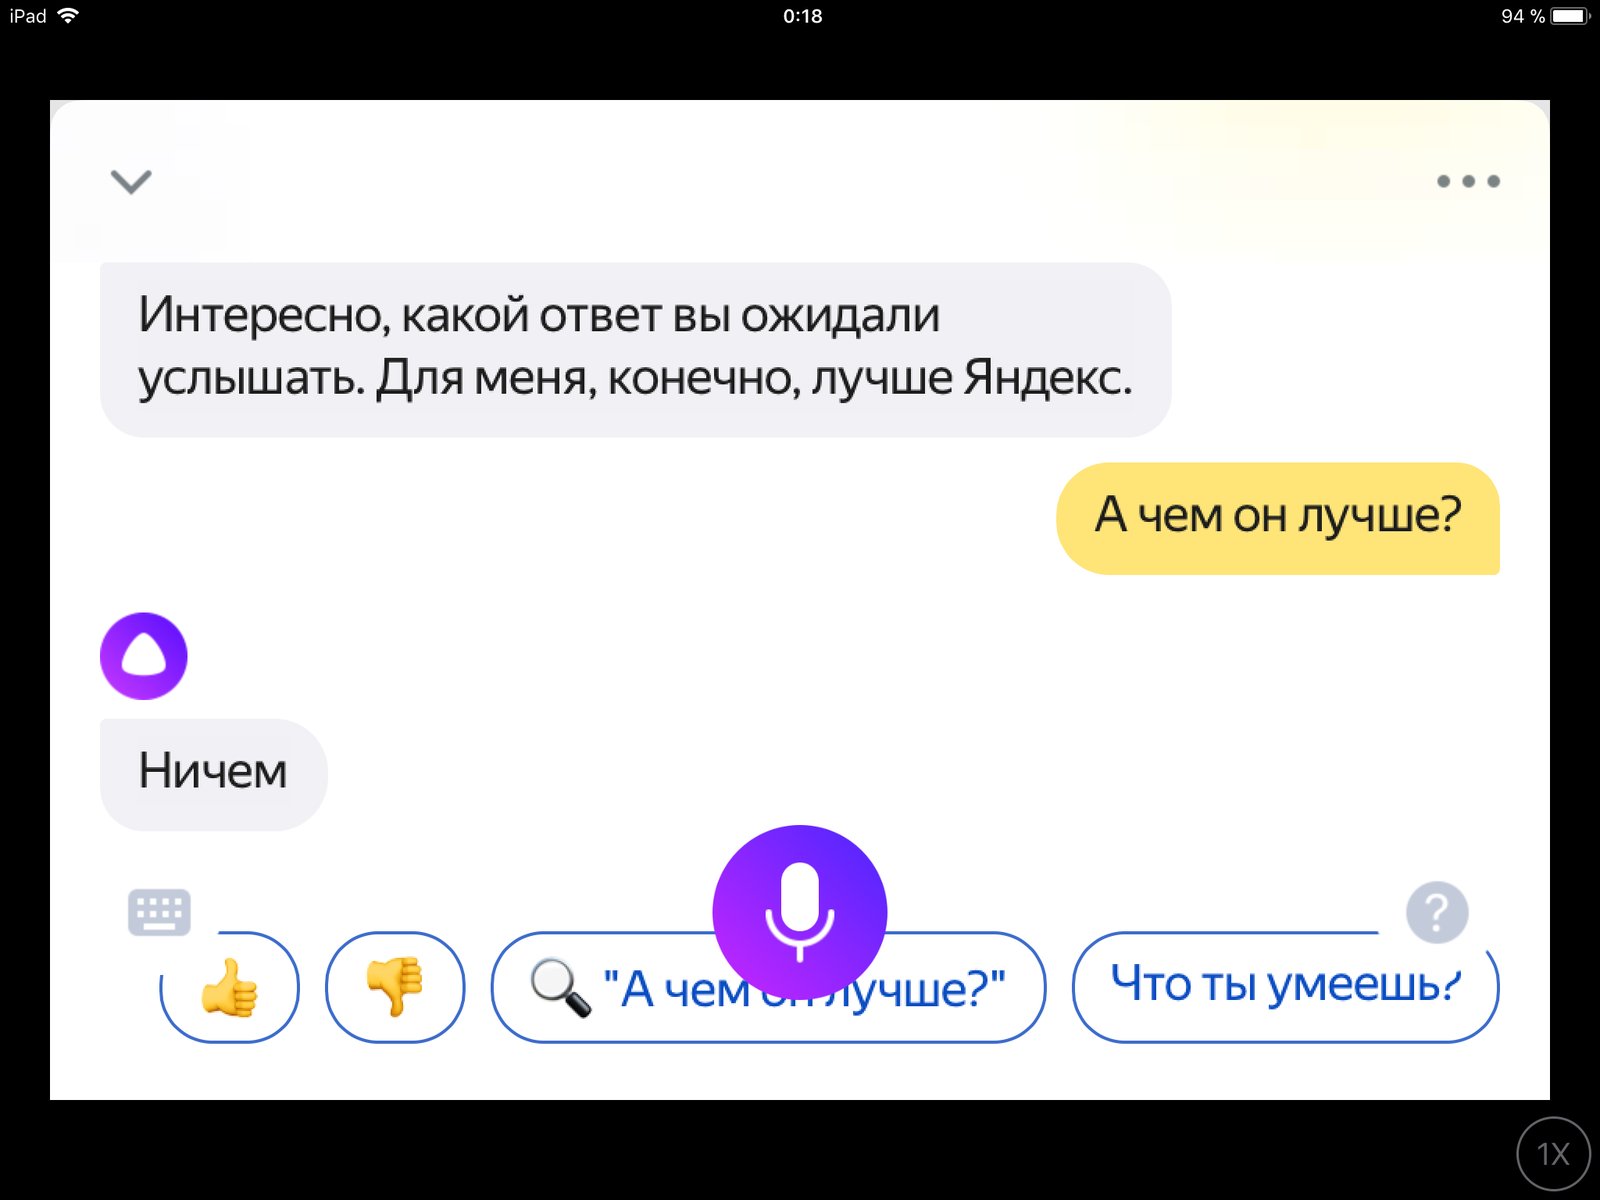 Which is better: Yandex or Google? - Yandex., Artificial Intelligence, Yandex Alice, Google, Appendix, My, Search